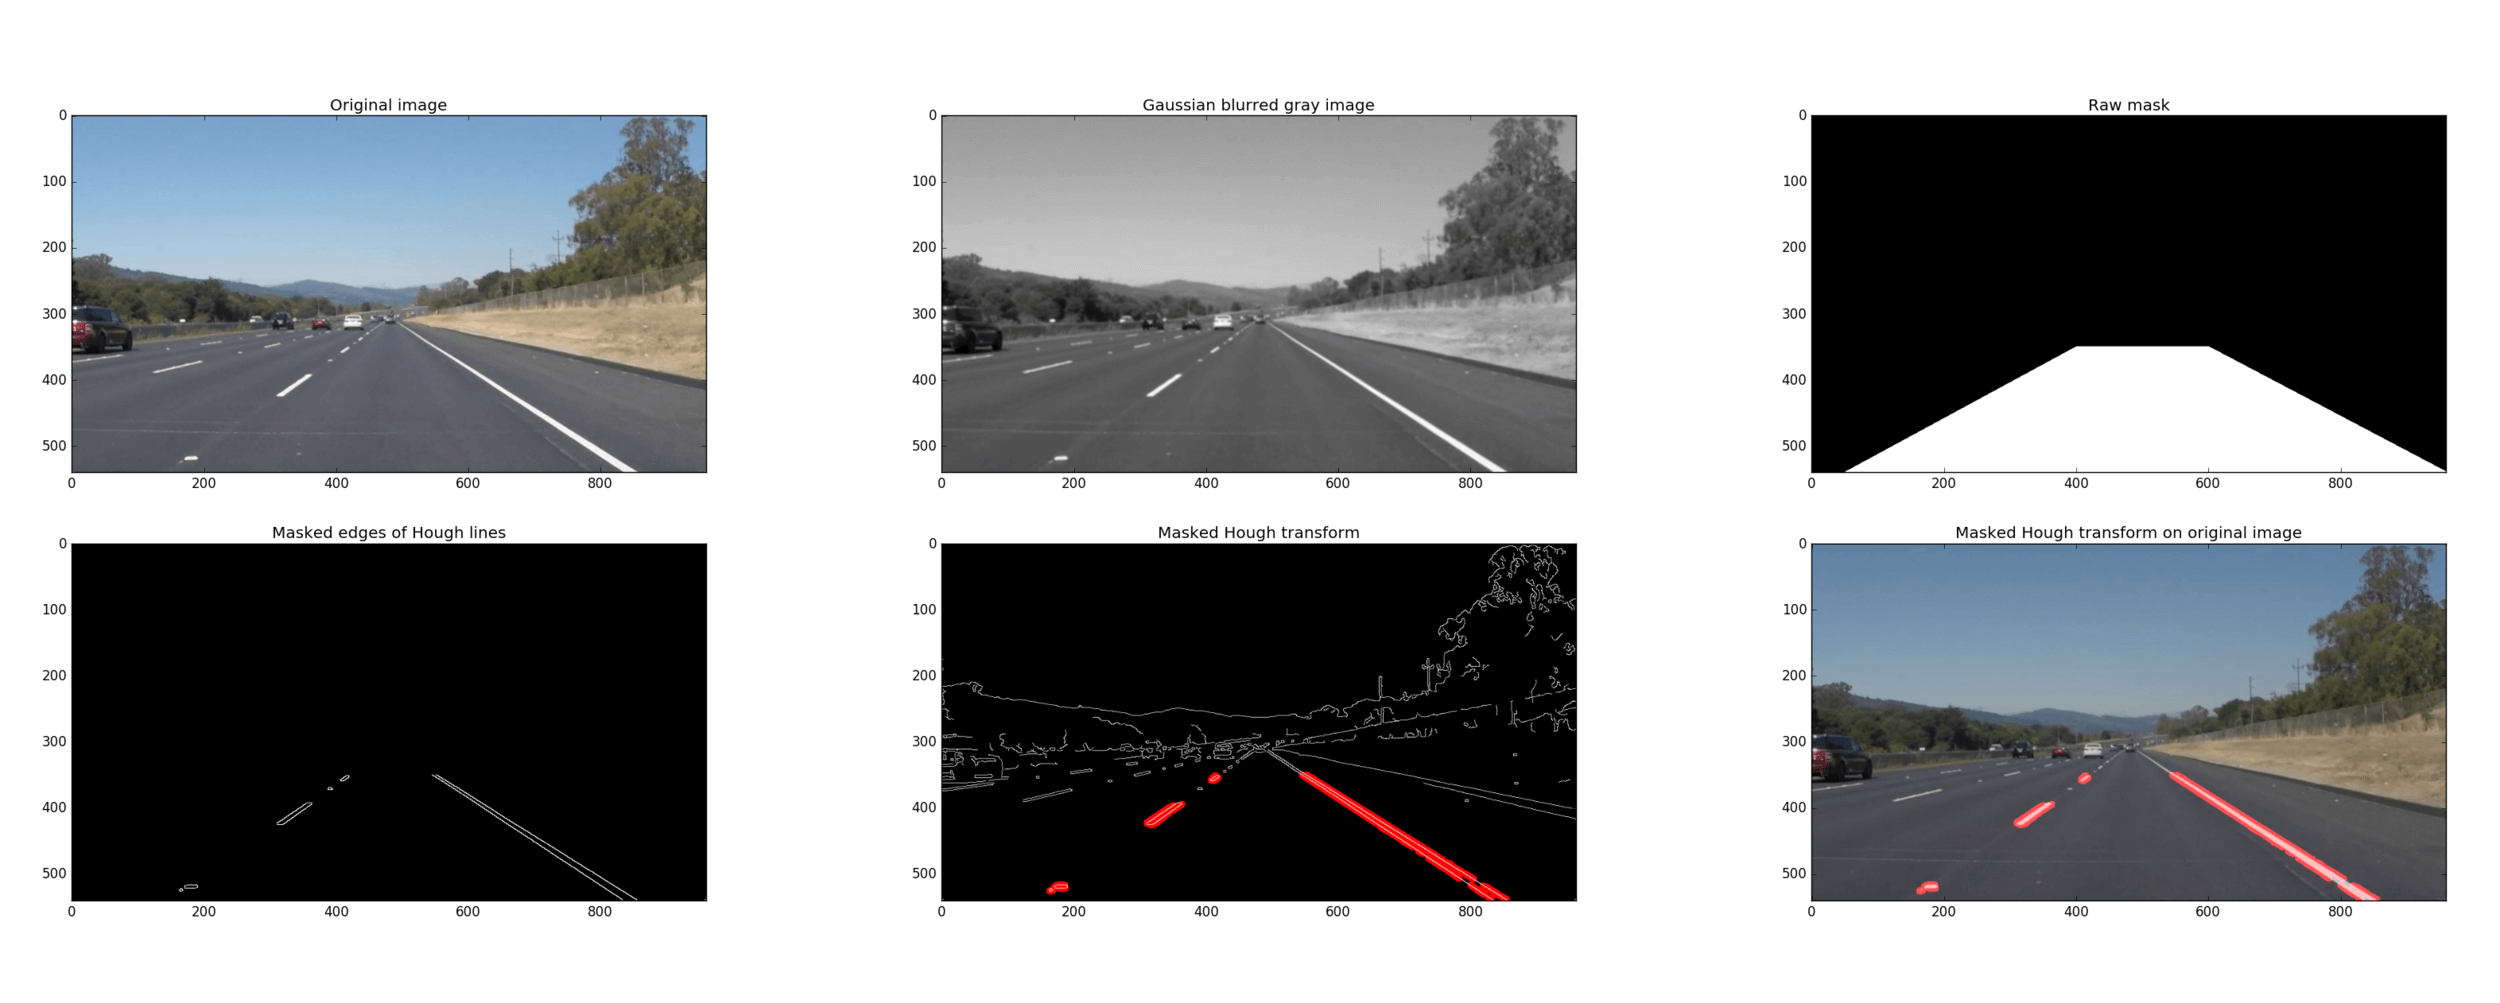 Part 1.1 Car Nd Detect Road Lanes Using Computer Vision and Python 3